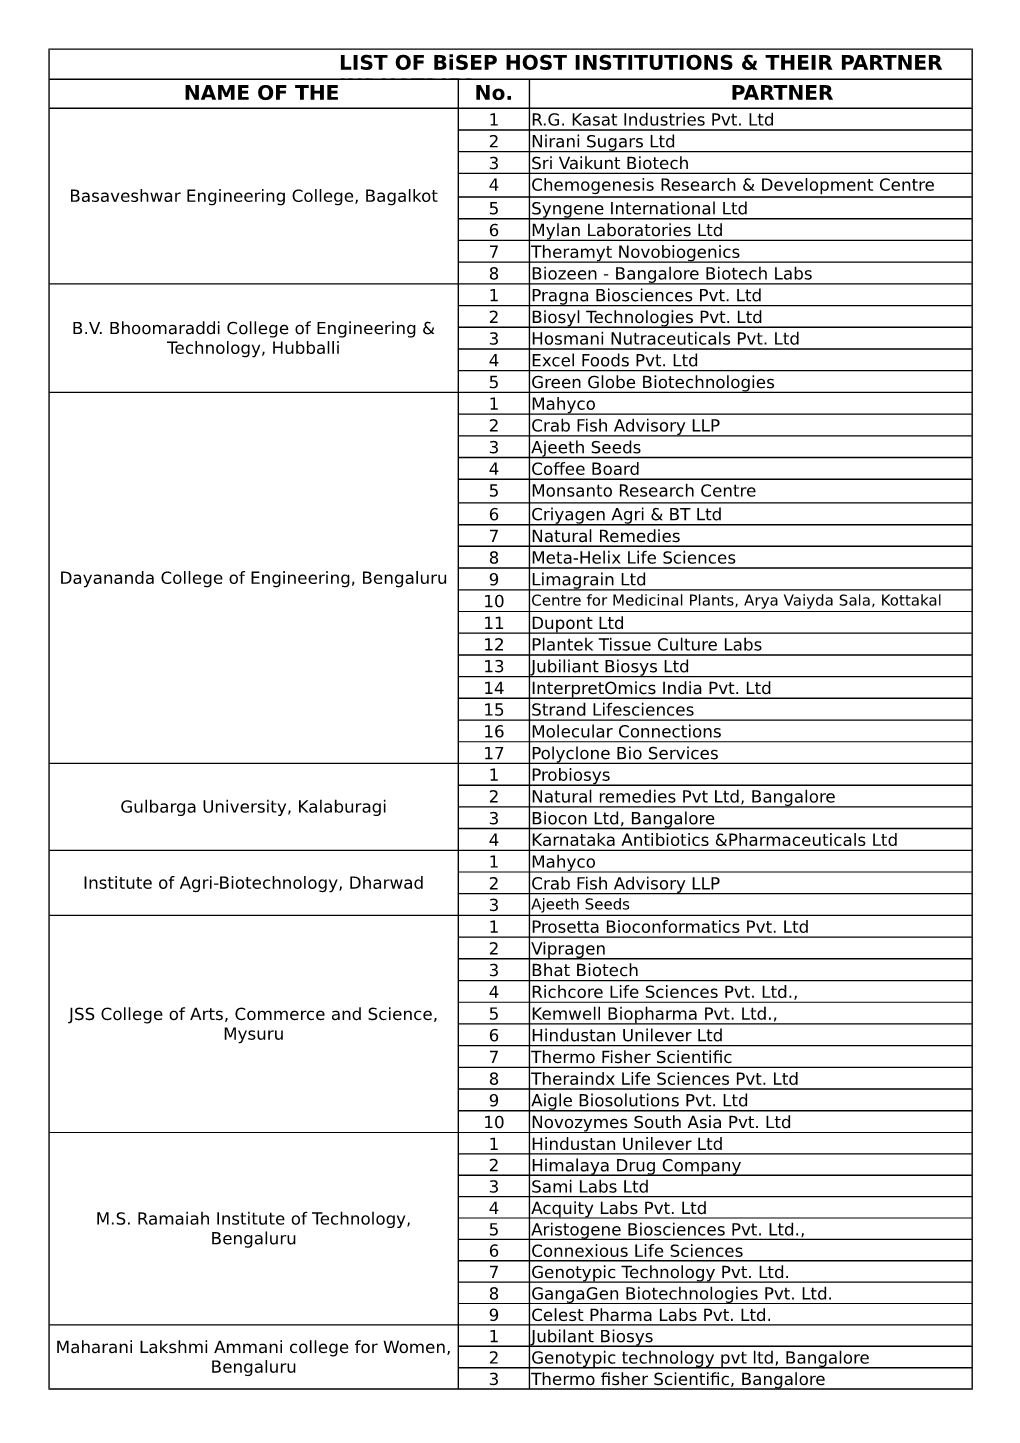 List of Partners Company